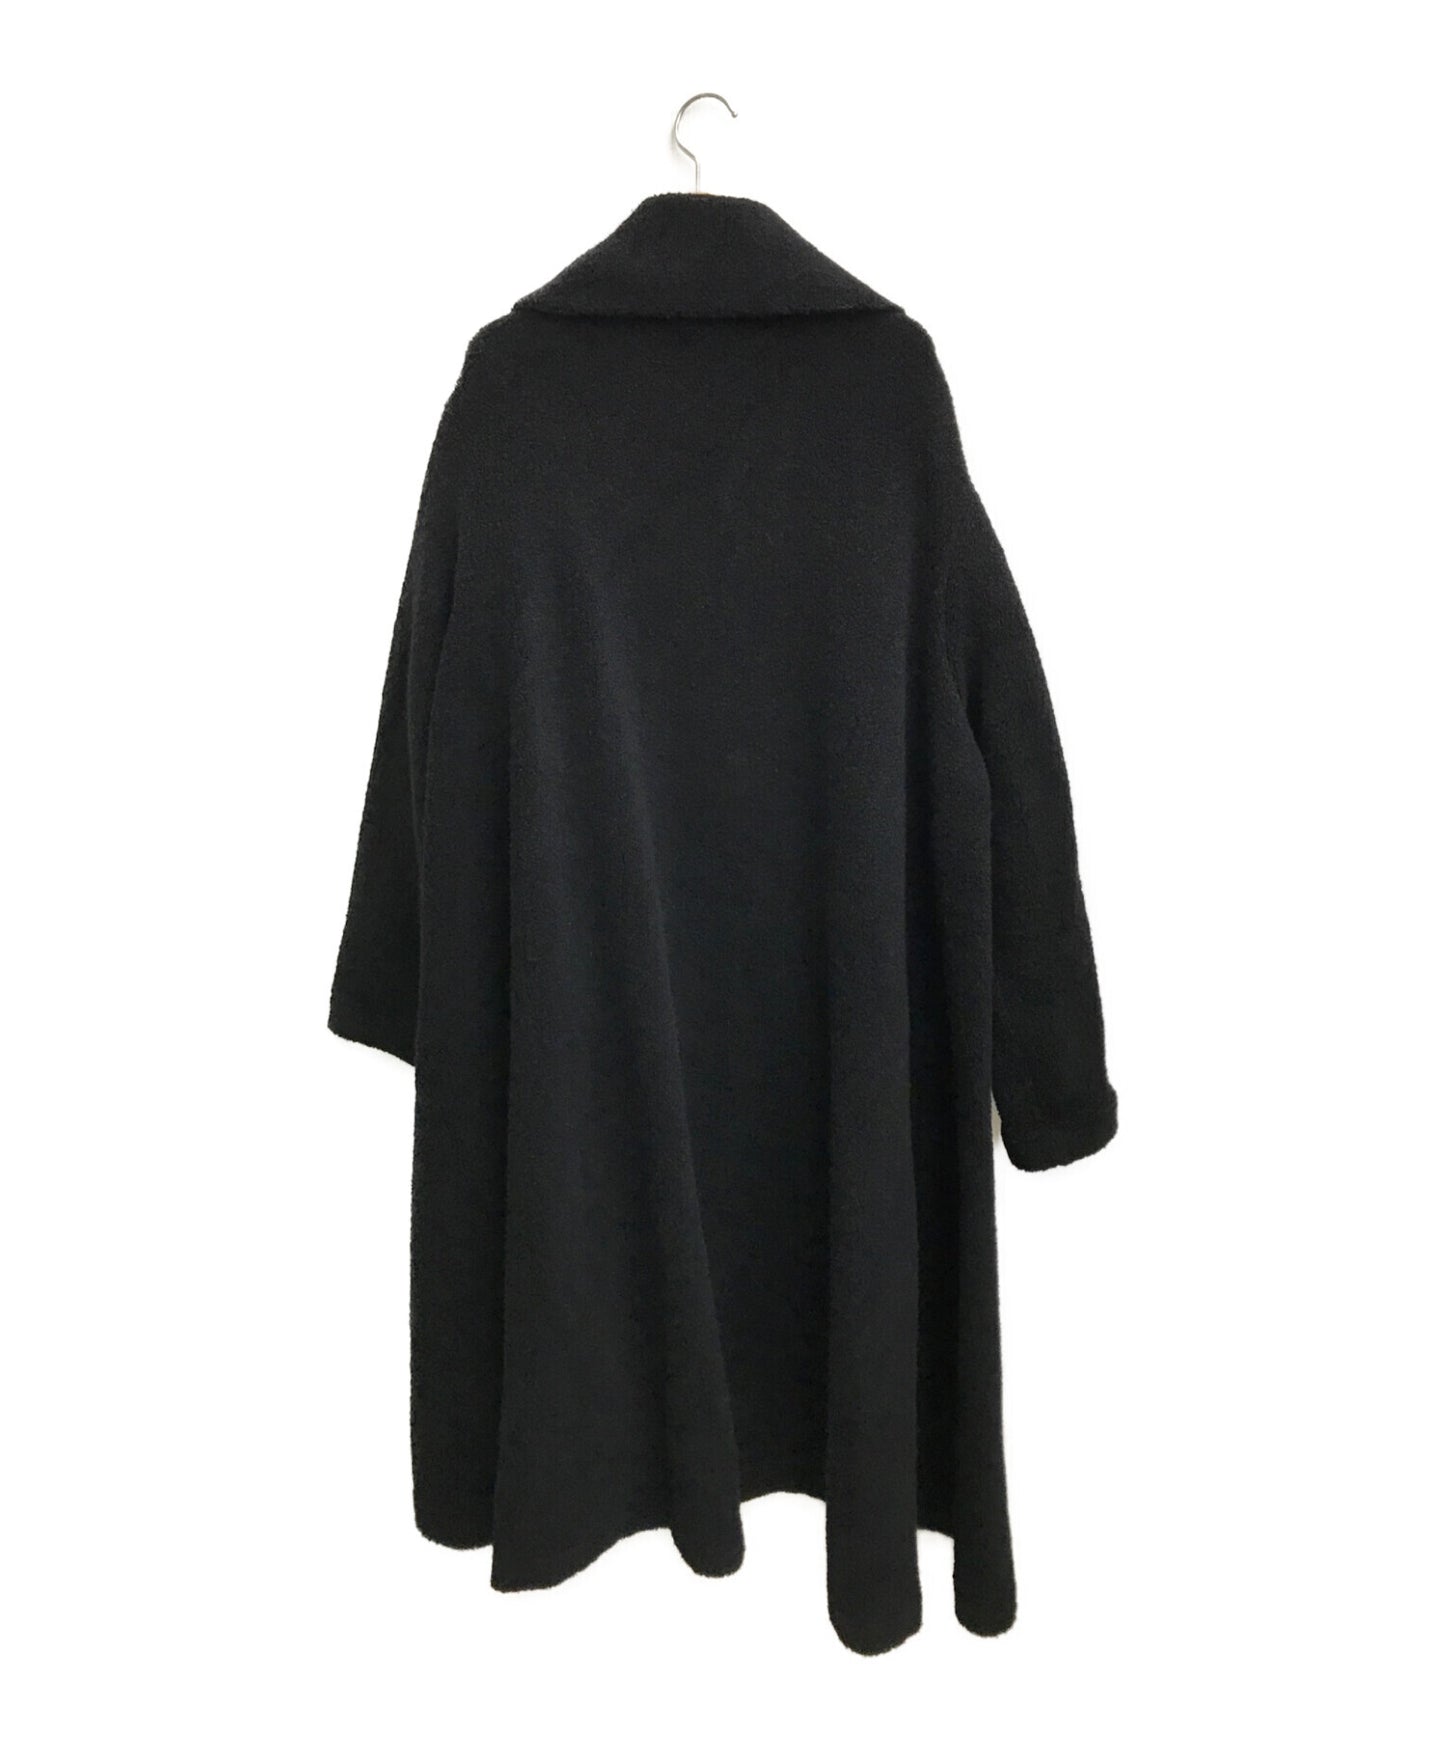 Limi Feu Sheep Pile Pin Coat / Boa Coat / Gown Coat / Wool Blend Coat LX-T46-143